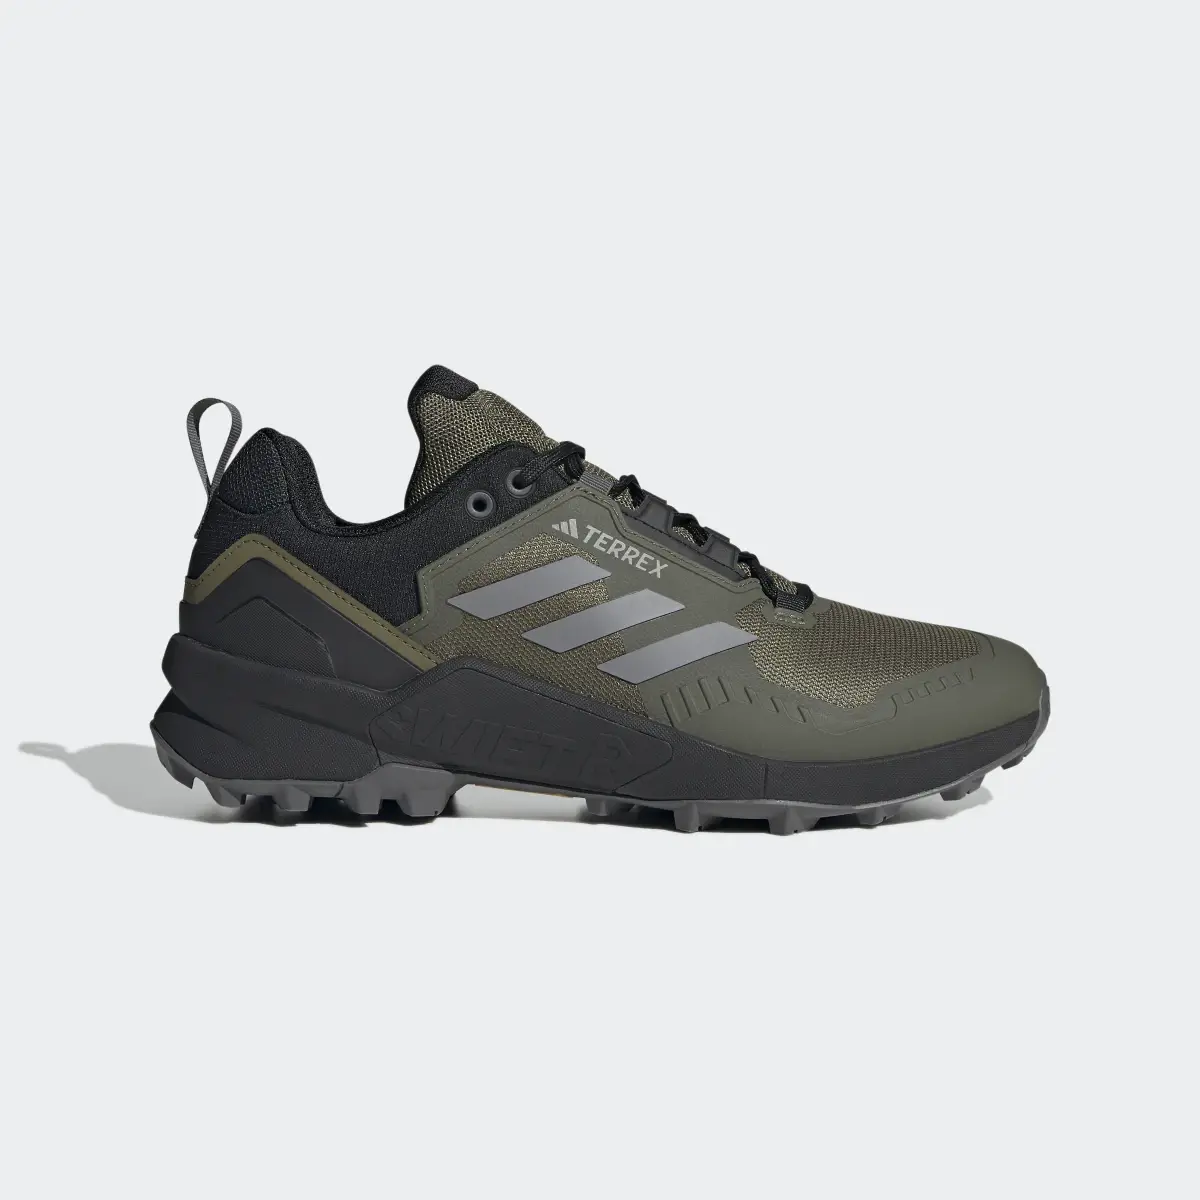 Adidas Terrex Swift R3 Hiking Shoes. 2